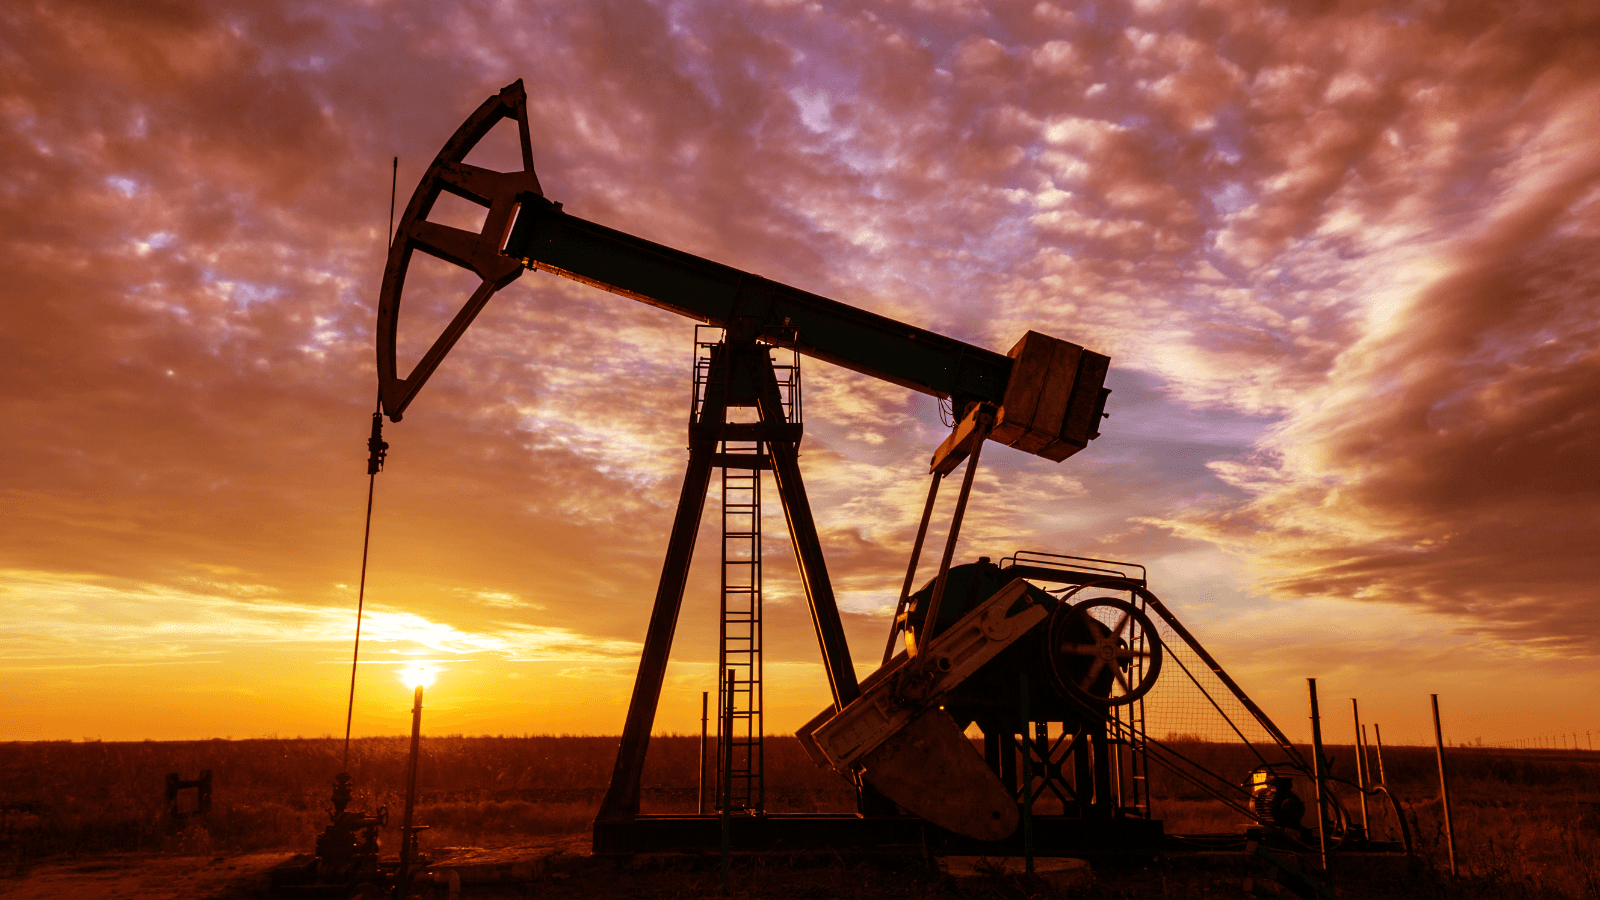 Oil well at dusk